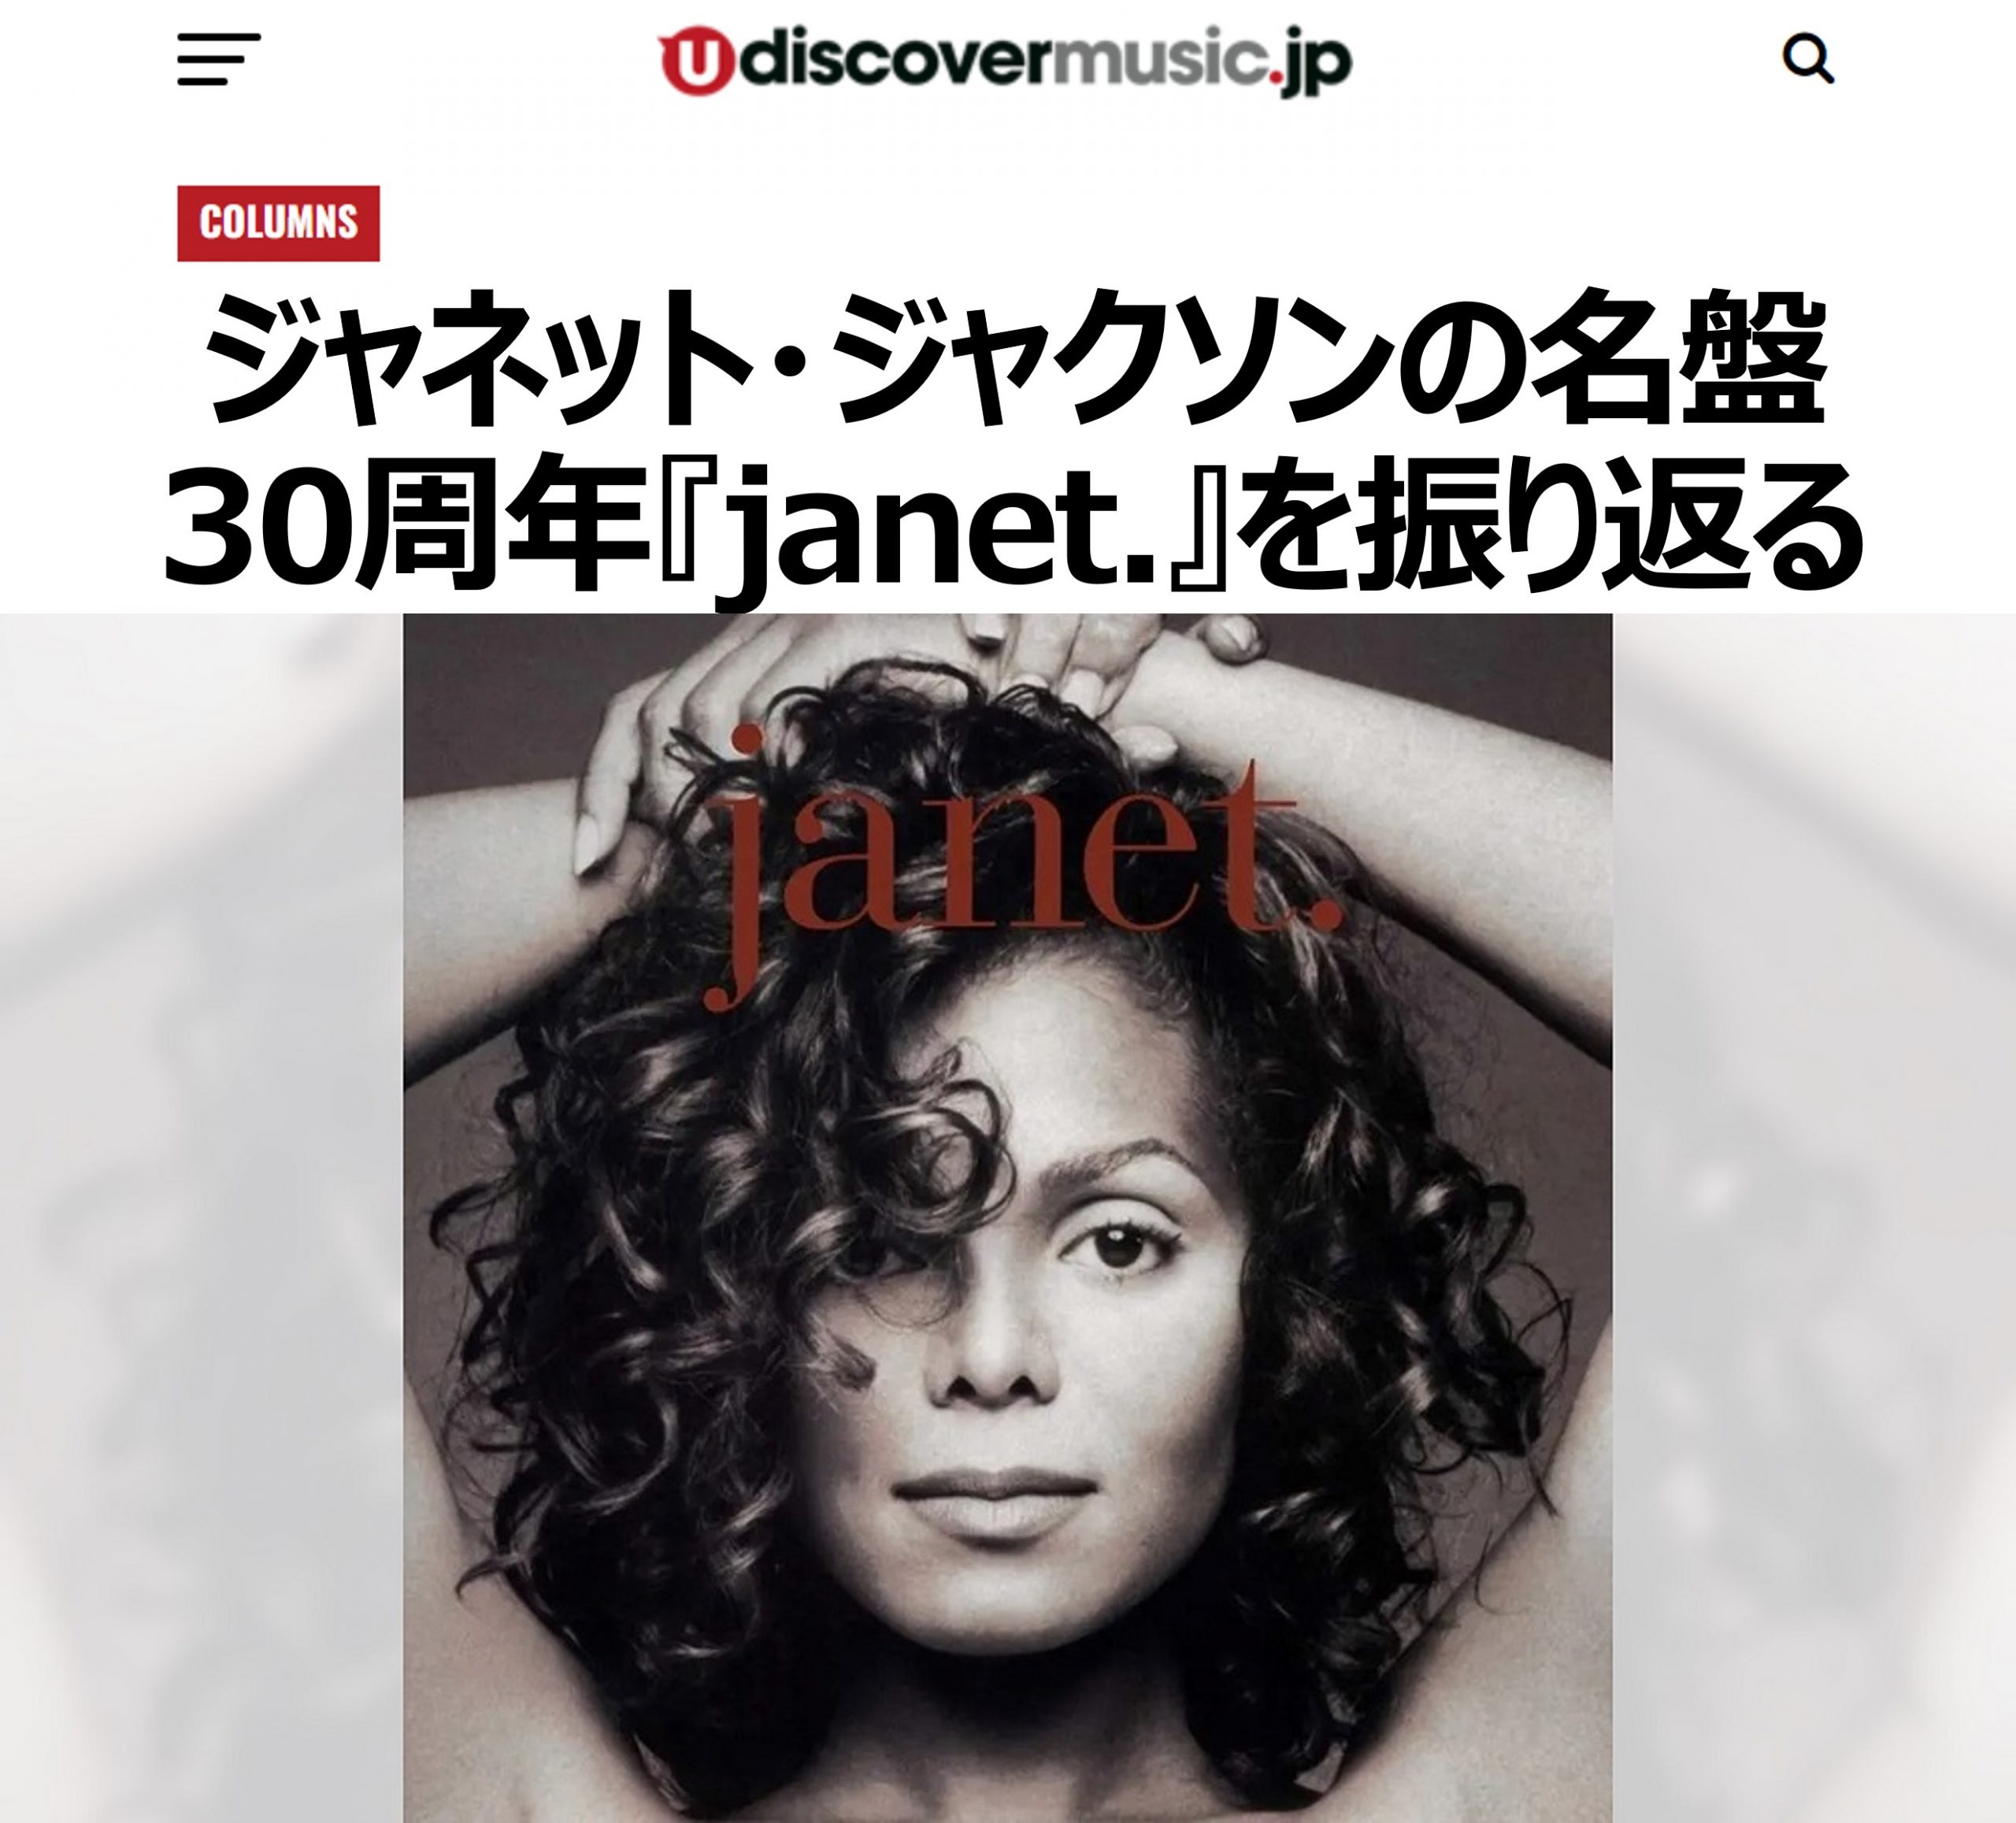 【uDiscovermusic掲載】30周年盤が発売となる『janet.』の解説が掲載 - ジャネット・ジャクソン